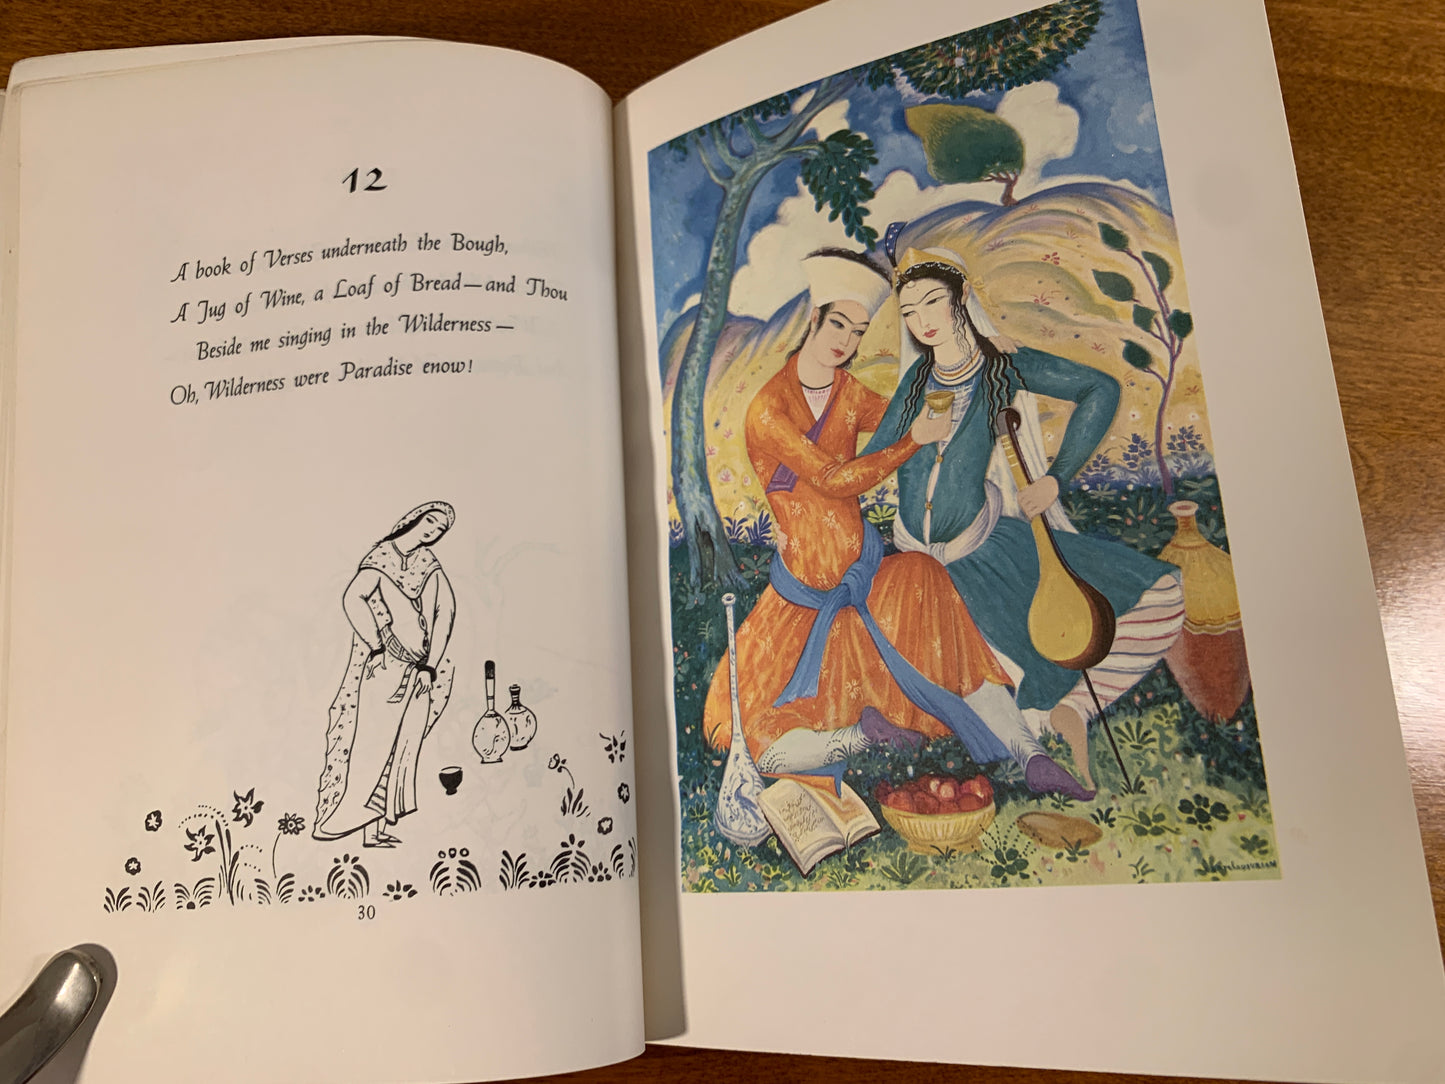 Rubaiyat of Omar Khayyam by Edward Fitzgerald, illustrations 1979